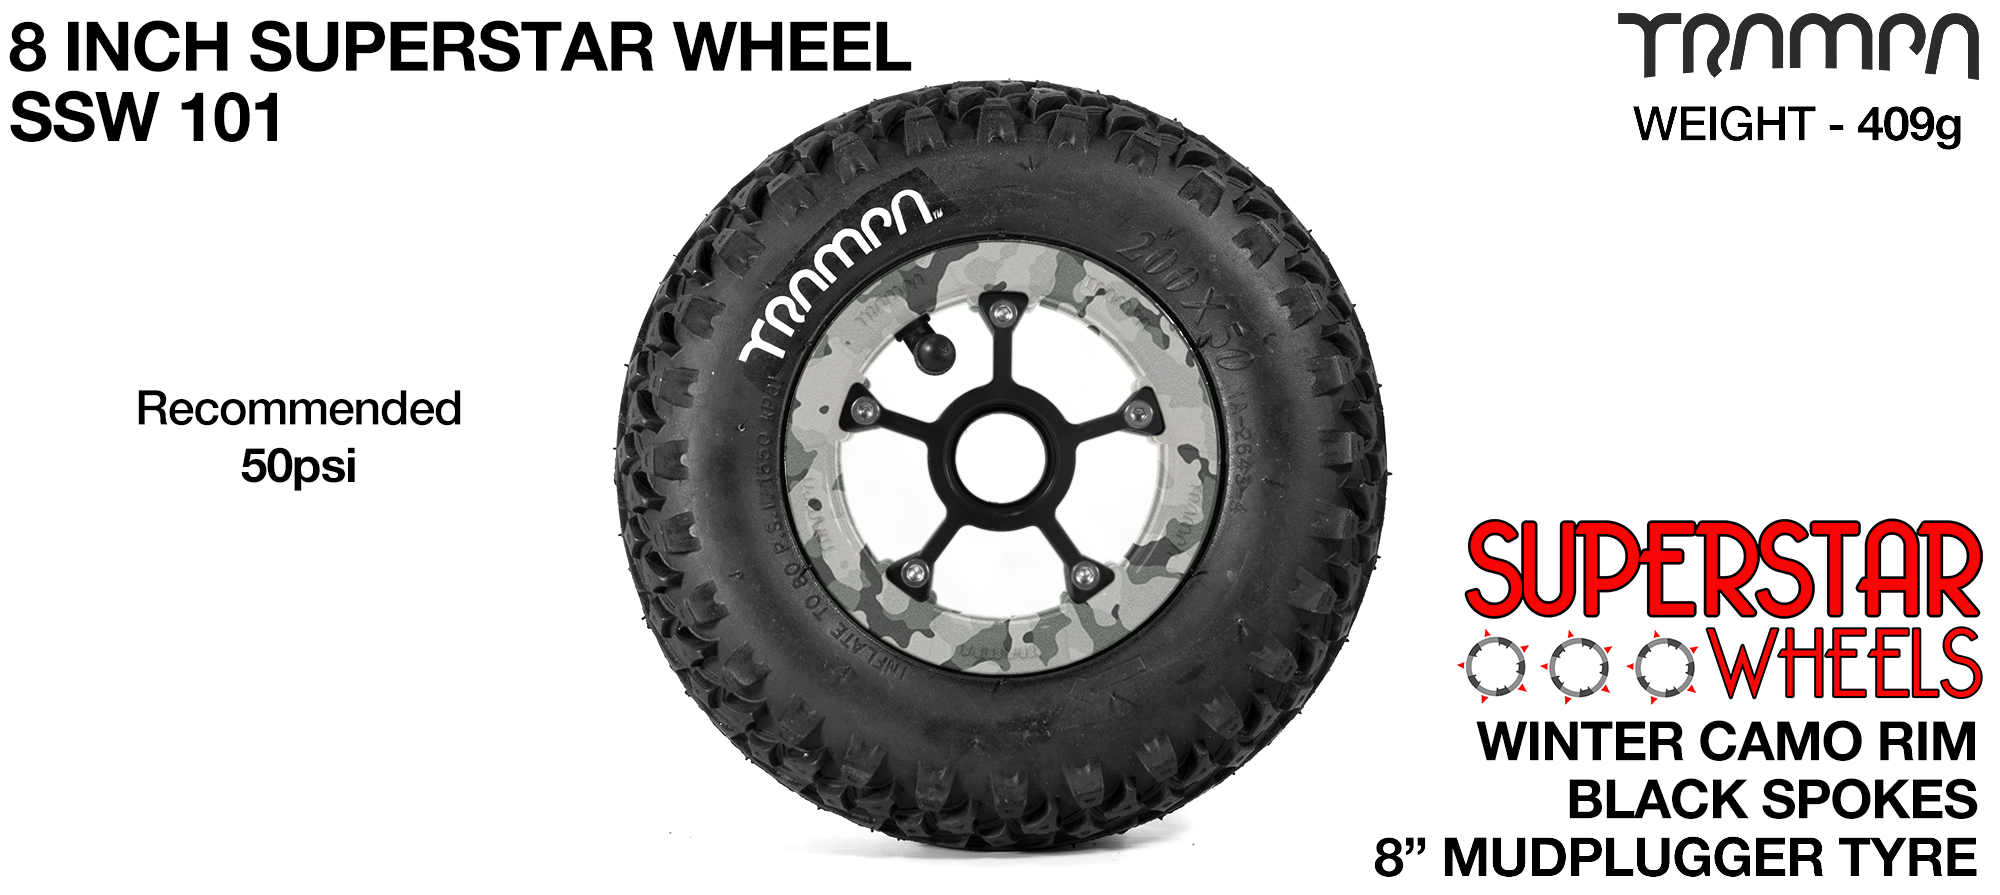 Superstar 8 inch wheels -  Winter Camo Rim Black Spokes & Mud Plugger 8 Inch Tyre